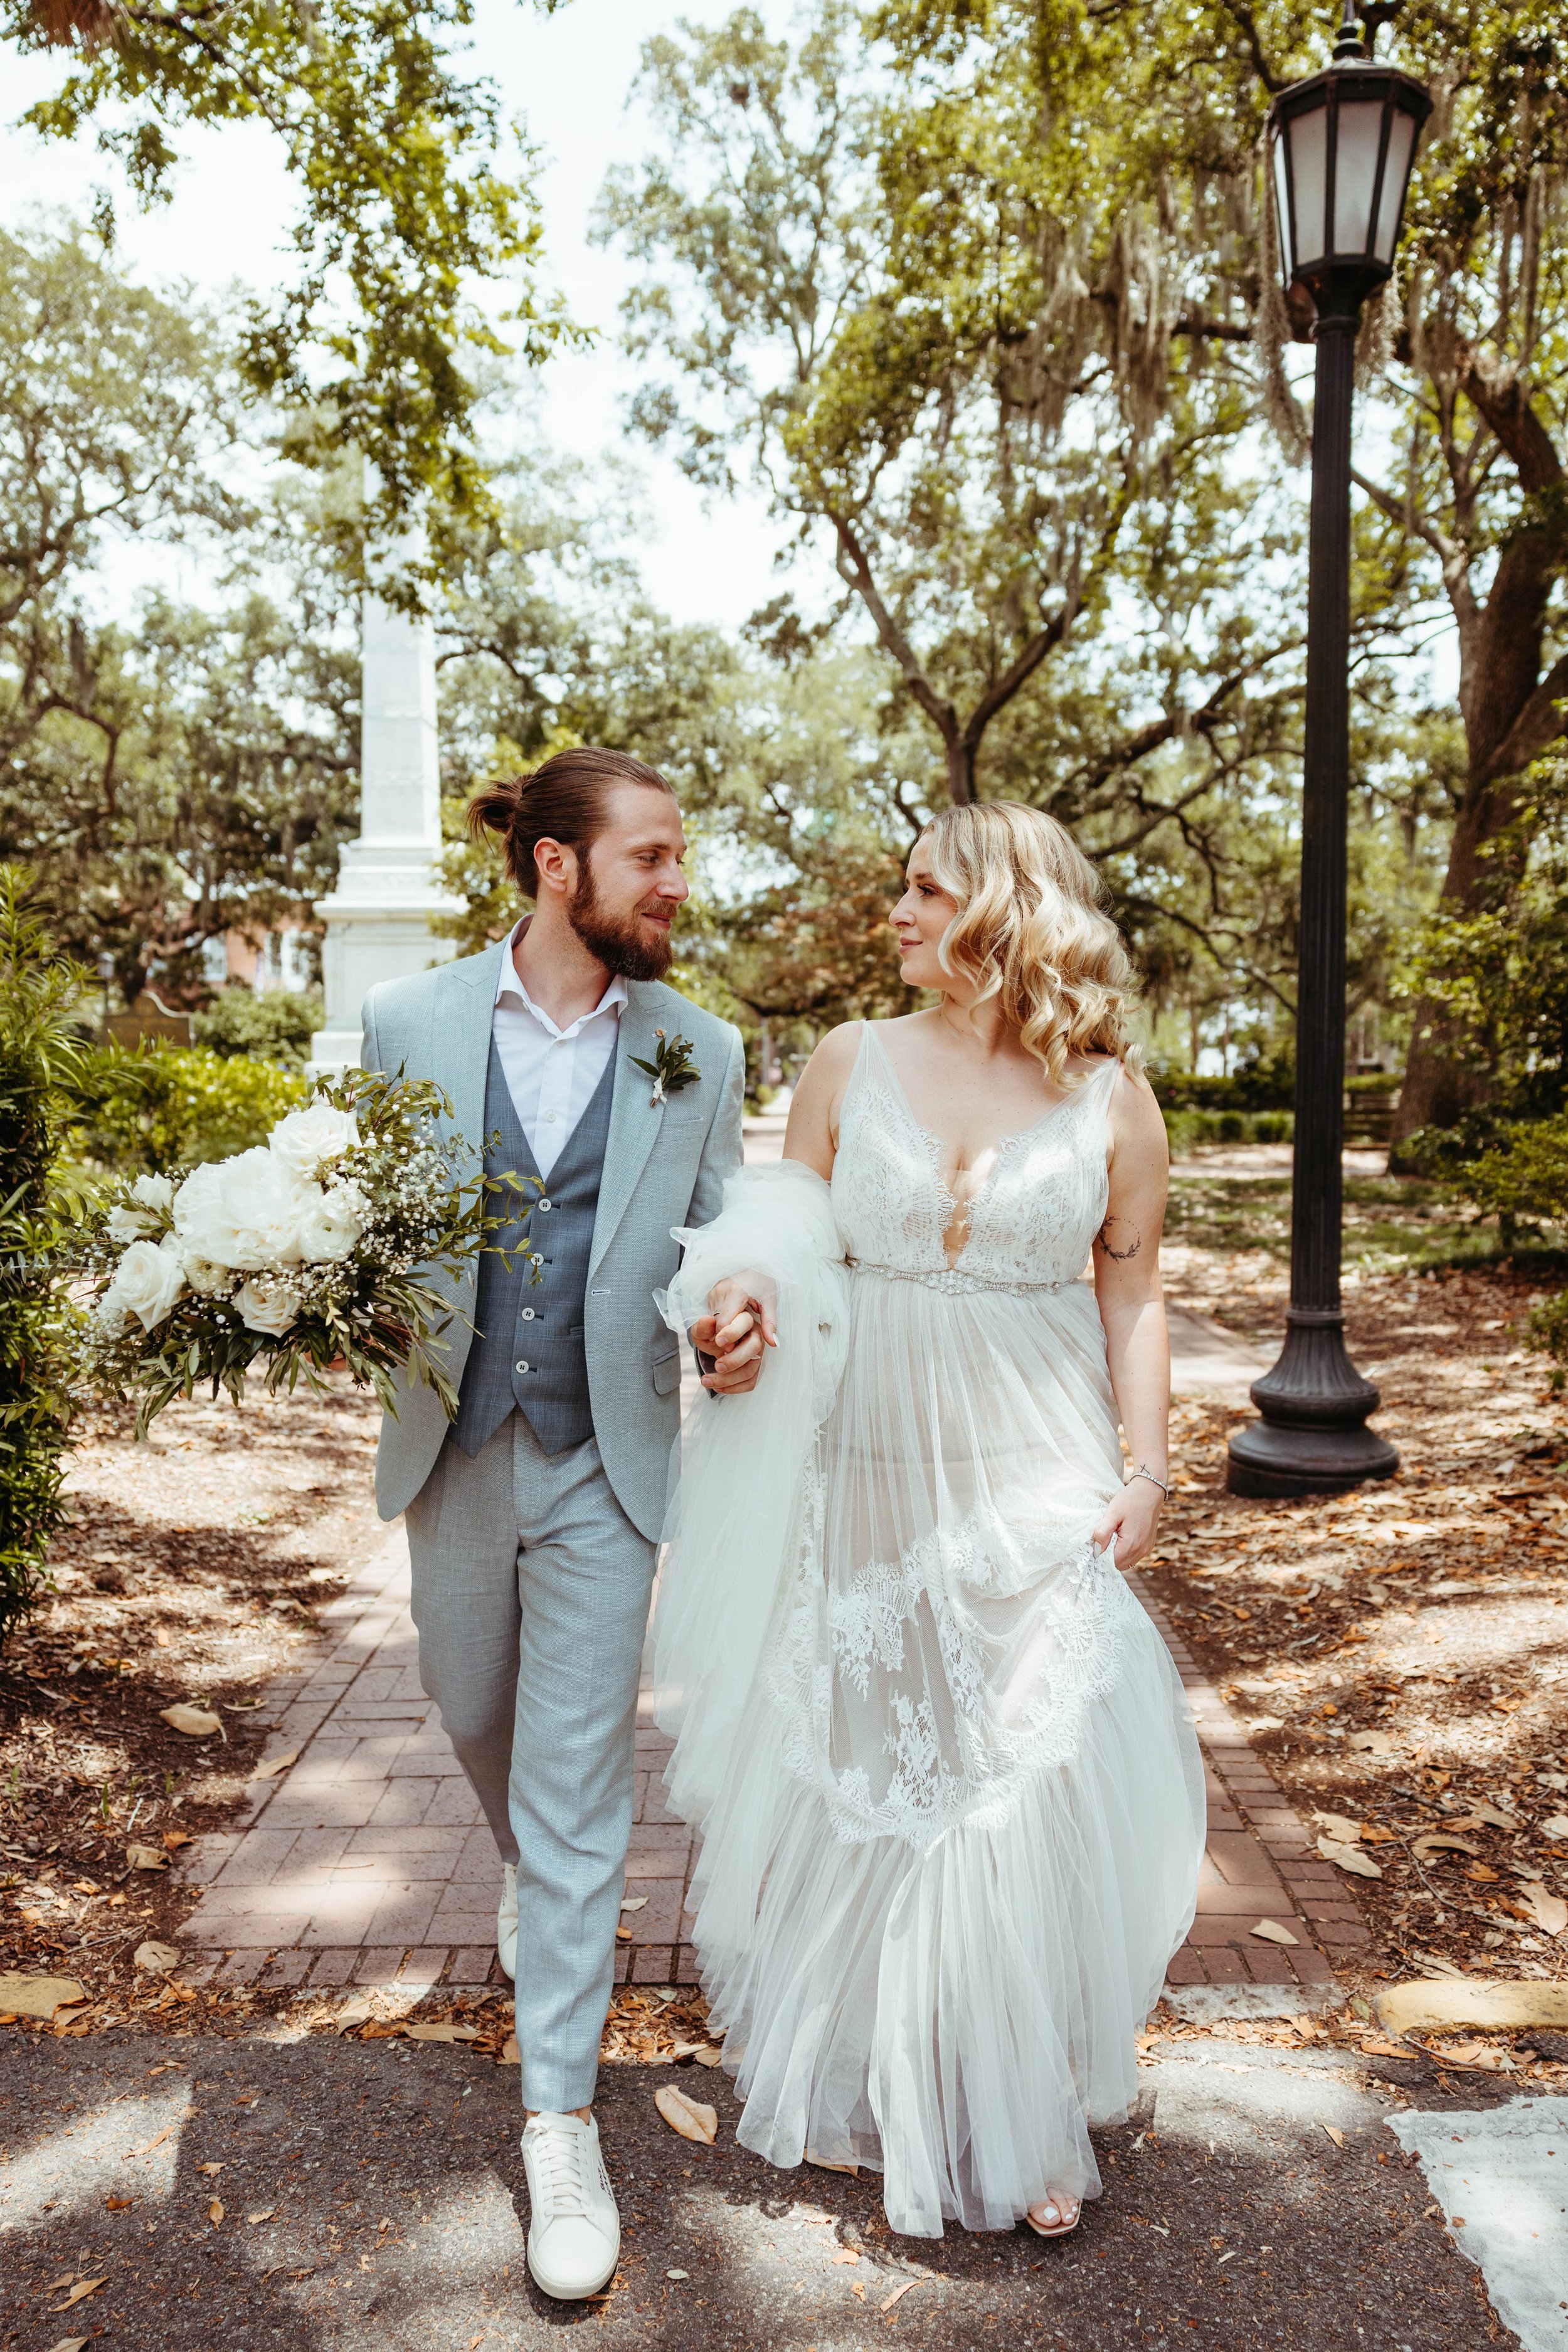 Savannah-bride-savannah-wedding-dresses-savannah-bridal-boutique-willowby-by-watters-aeryn-wedding-dress-charles-morris-center-wedding-garden-wedding-boho-wedding-dress-savannah-weddings-11.jpg